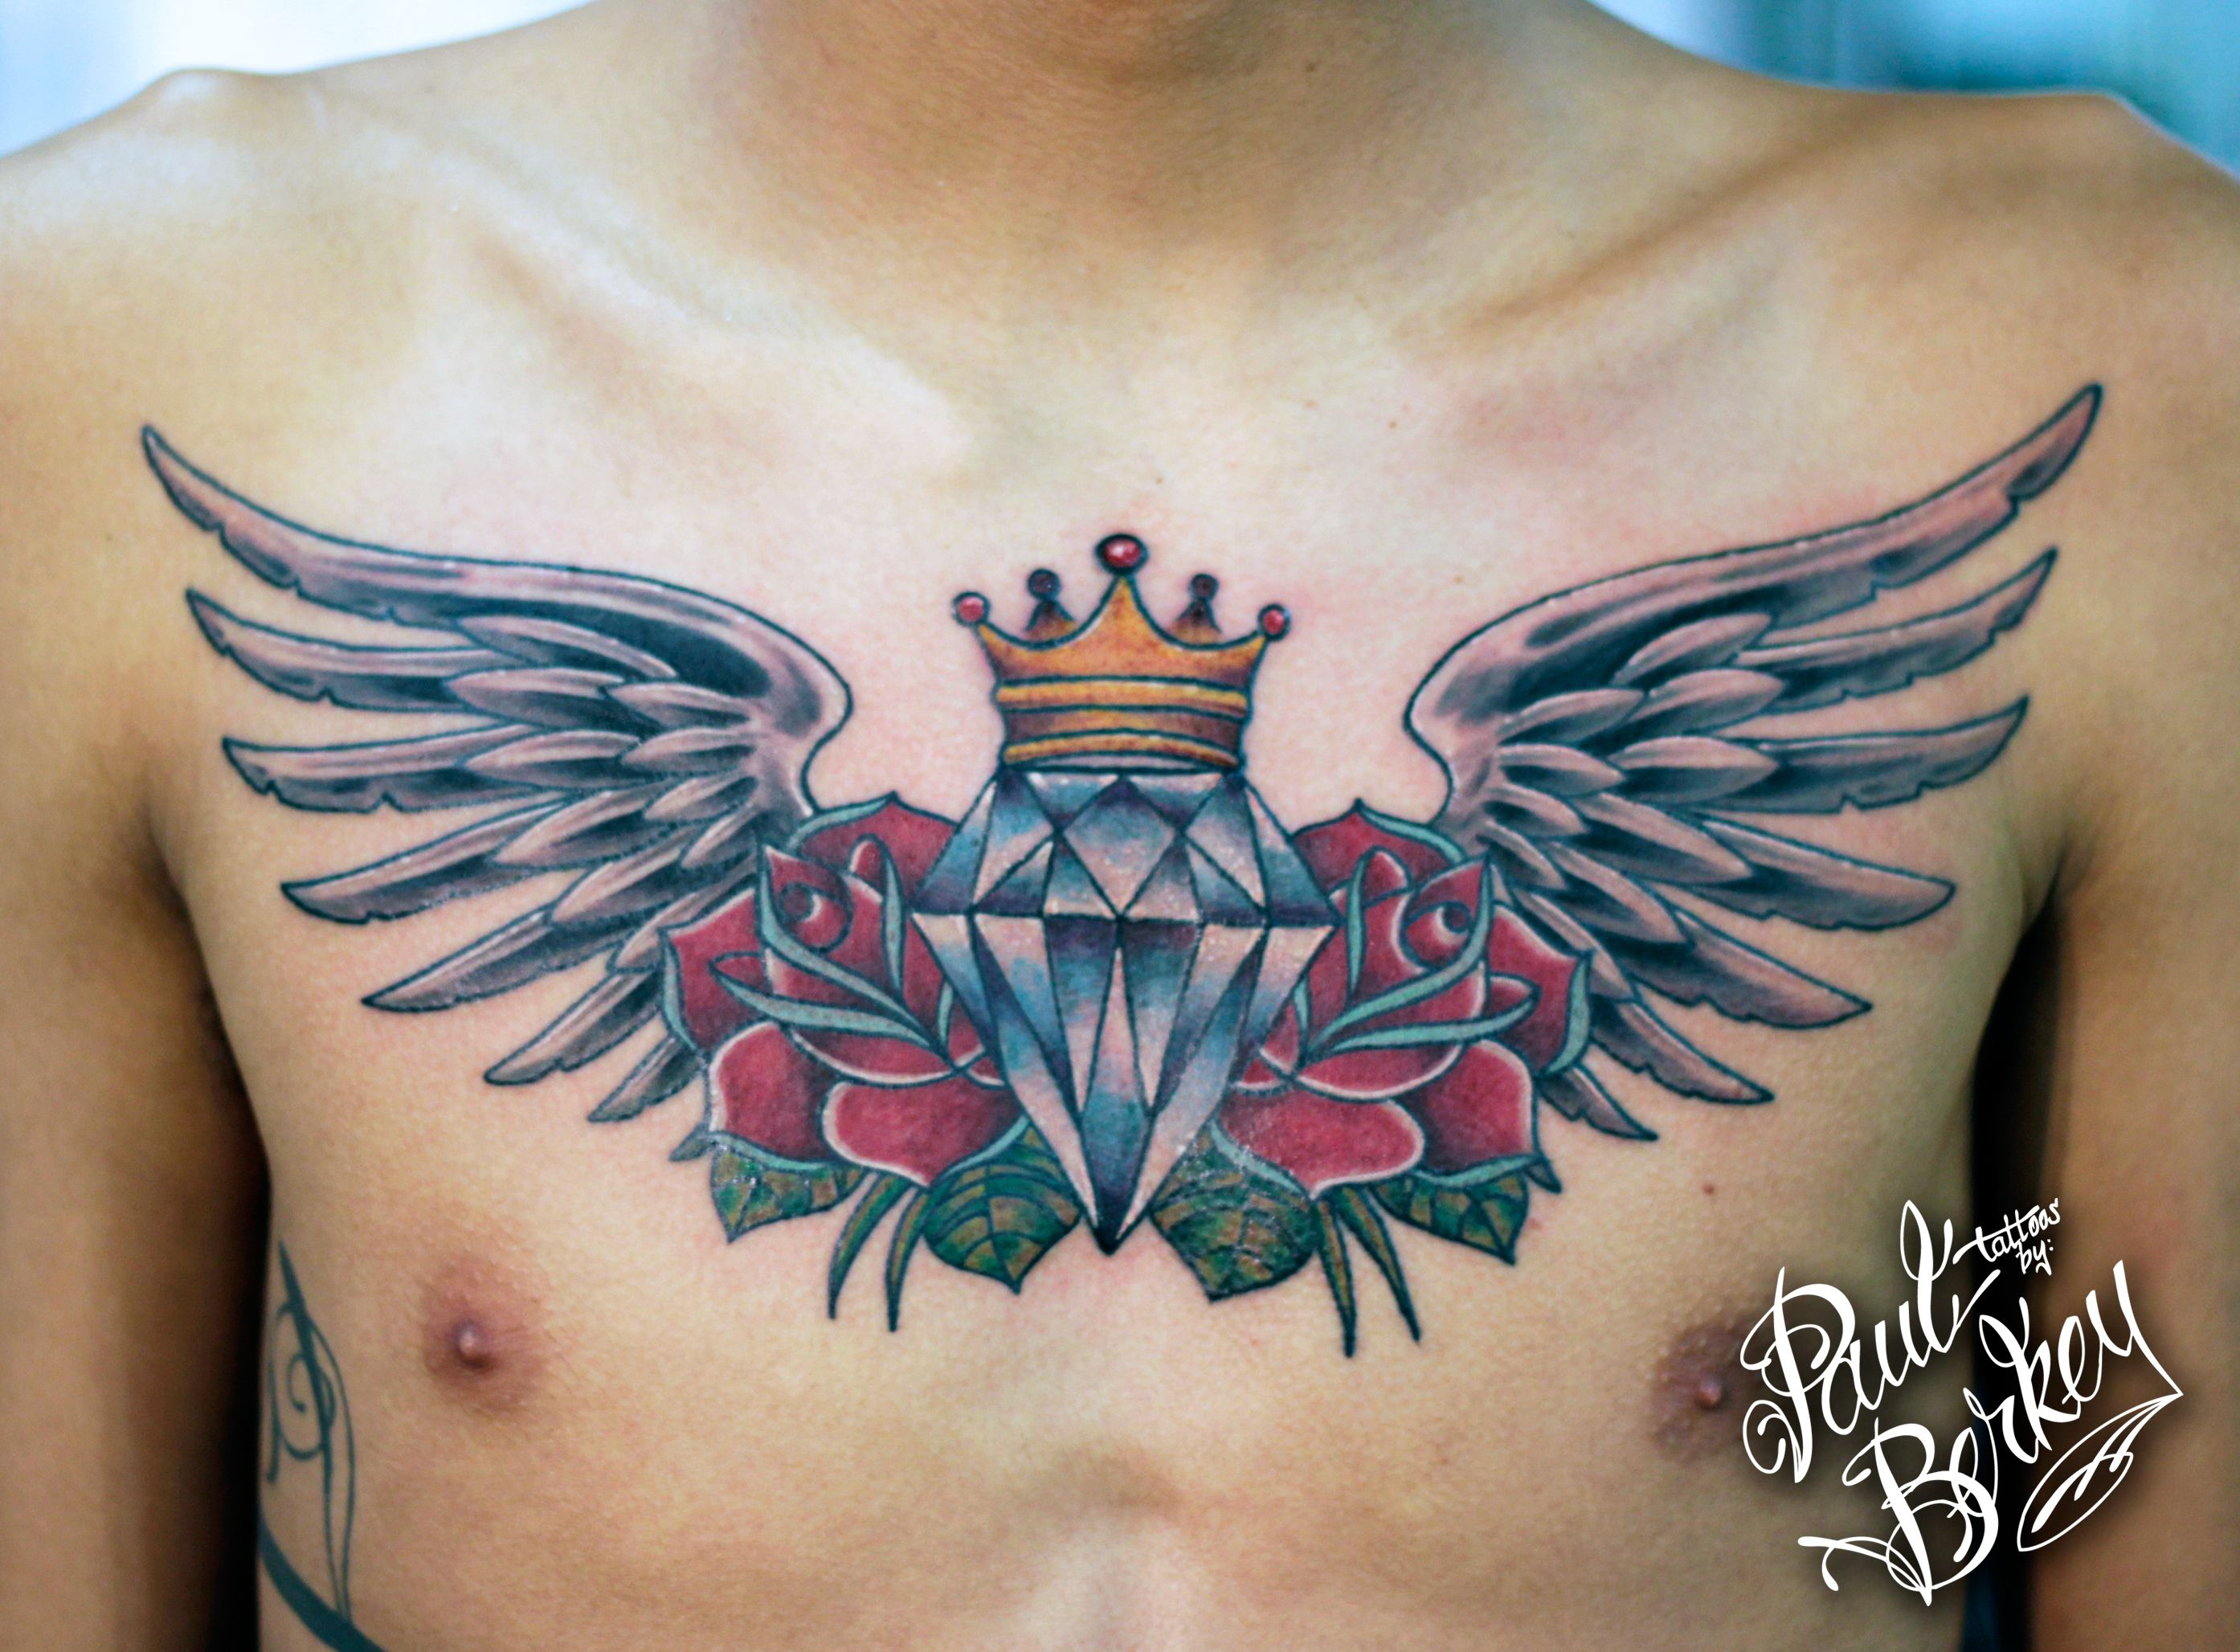 Chest Diamond Wings Roses Tattoos Paulberkey Tattoos with regard to dimensions 2788 X 2056